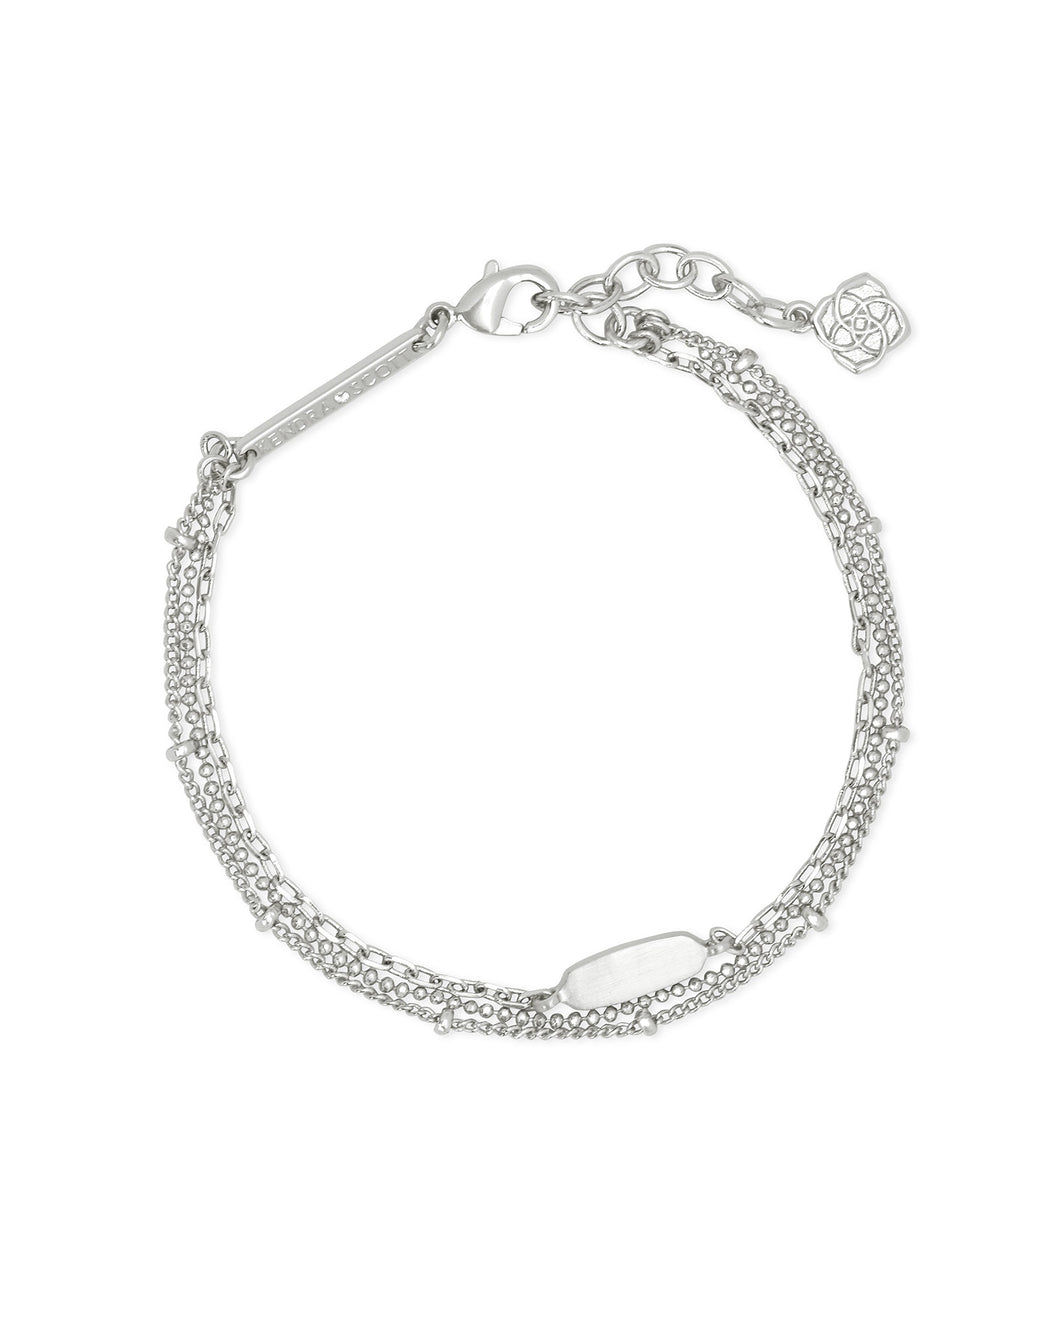 Fern Multi Strand Bracelet in Bright Silver